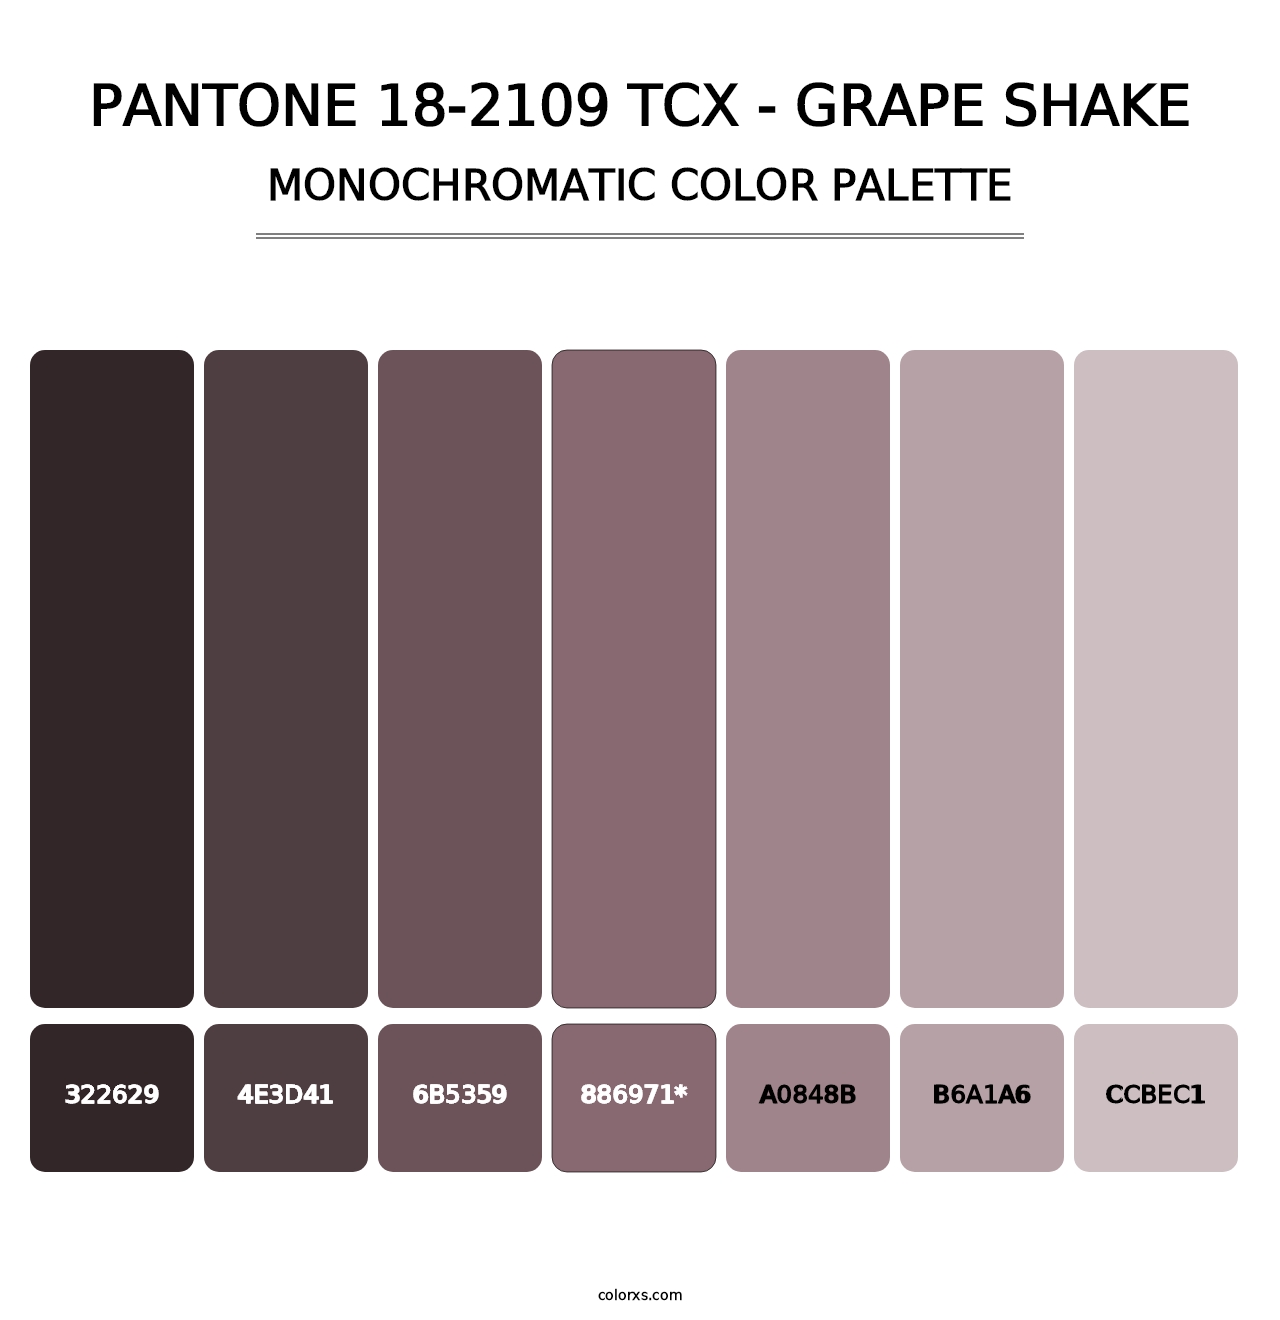 PANTONE 18-2109 TCX - Grape Shake - Monochromatic Color Palette